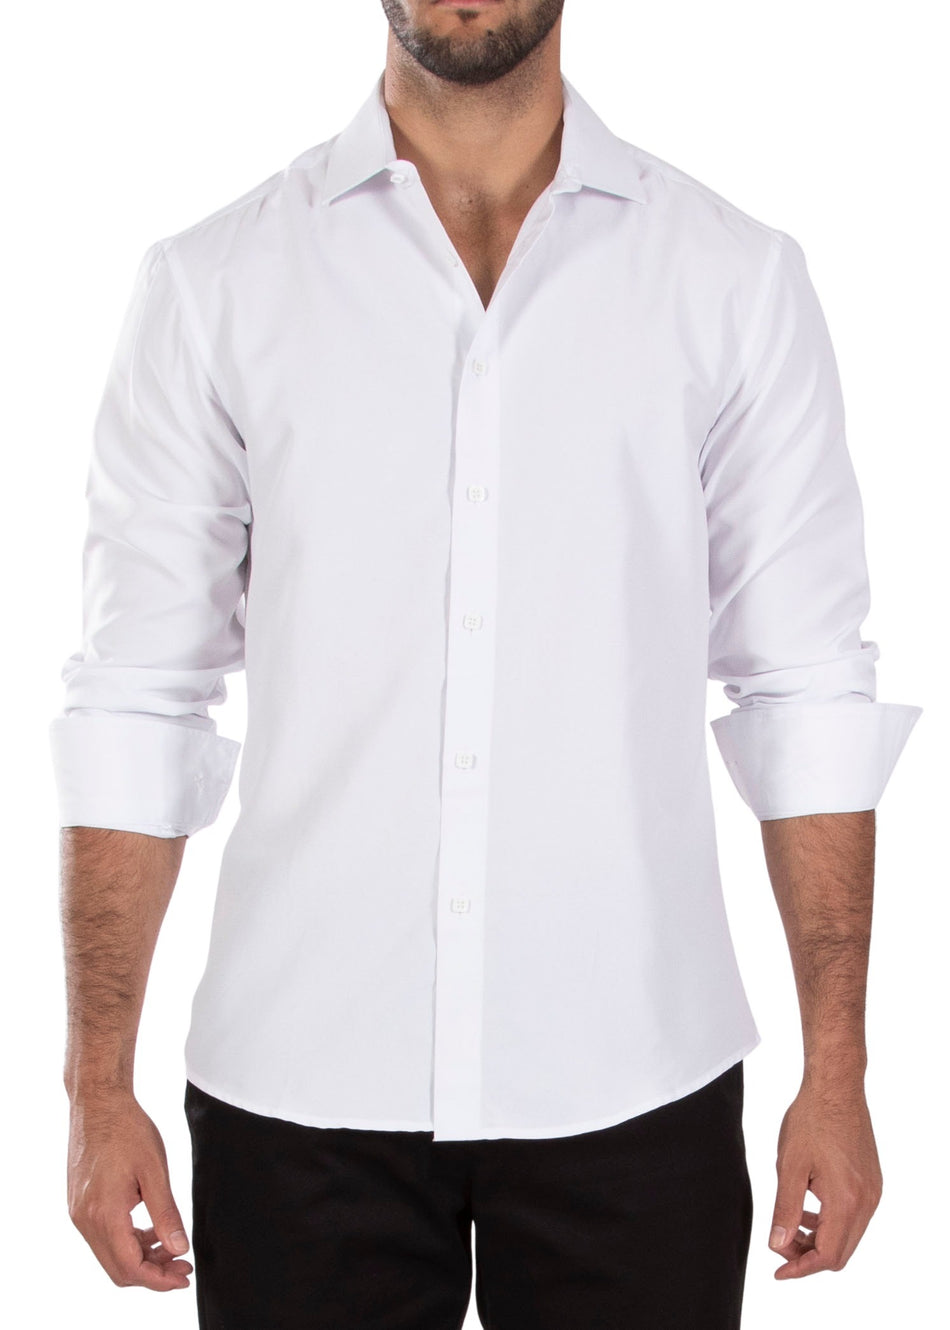 232308 - White Long Sleeve Shirt